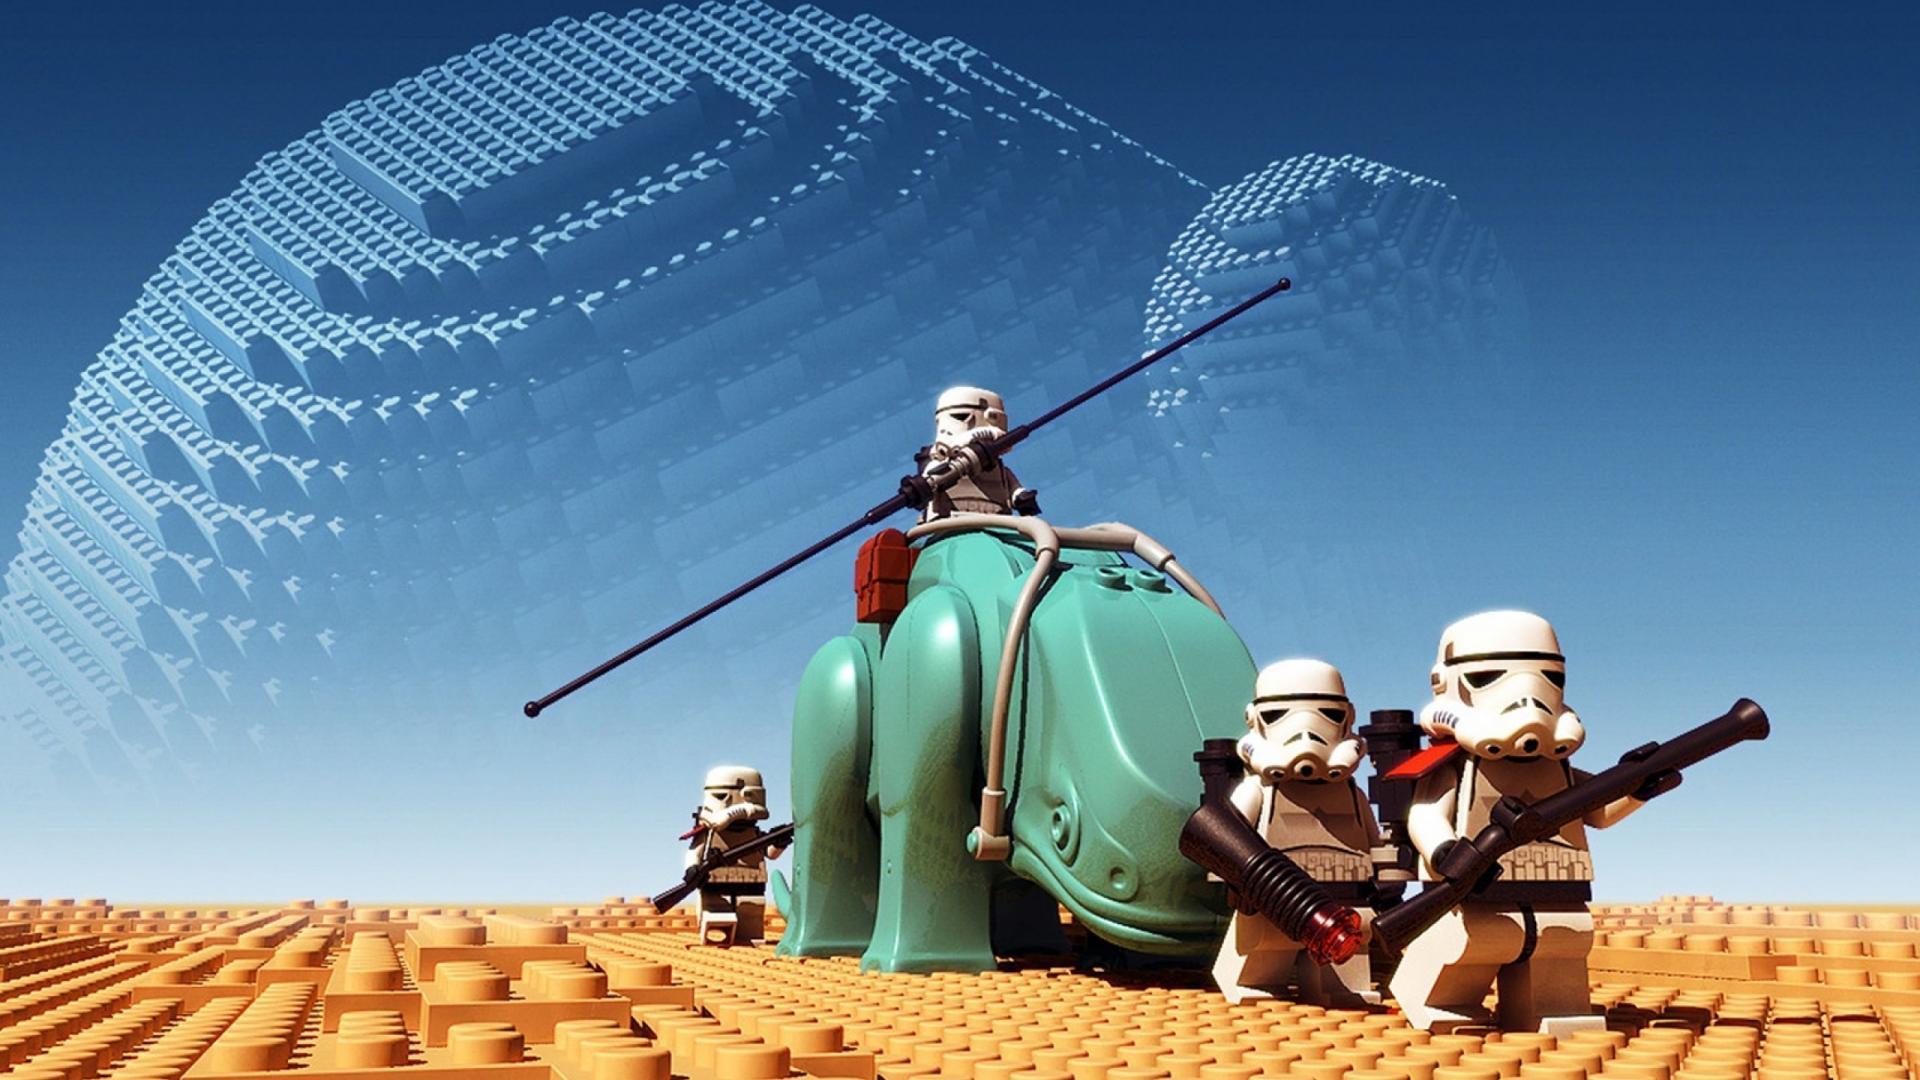 Lego Star Wars Wallpaper